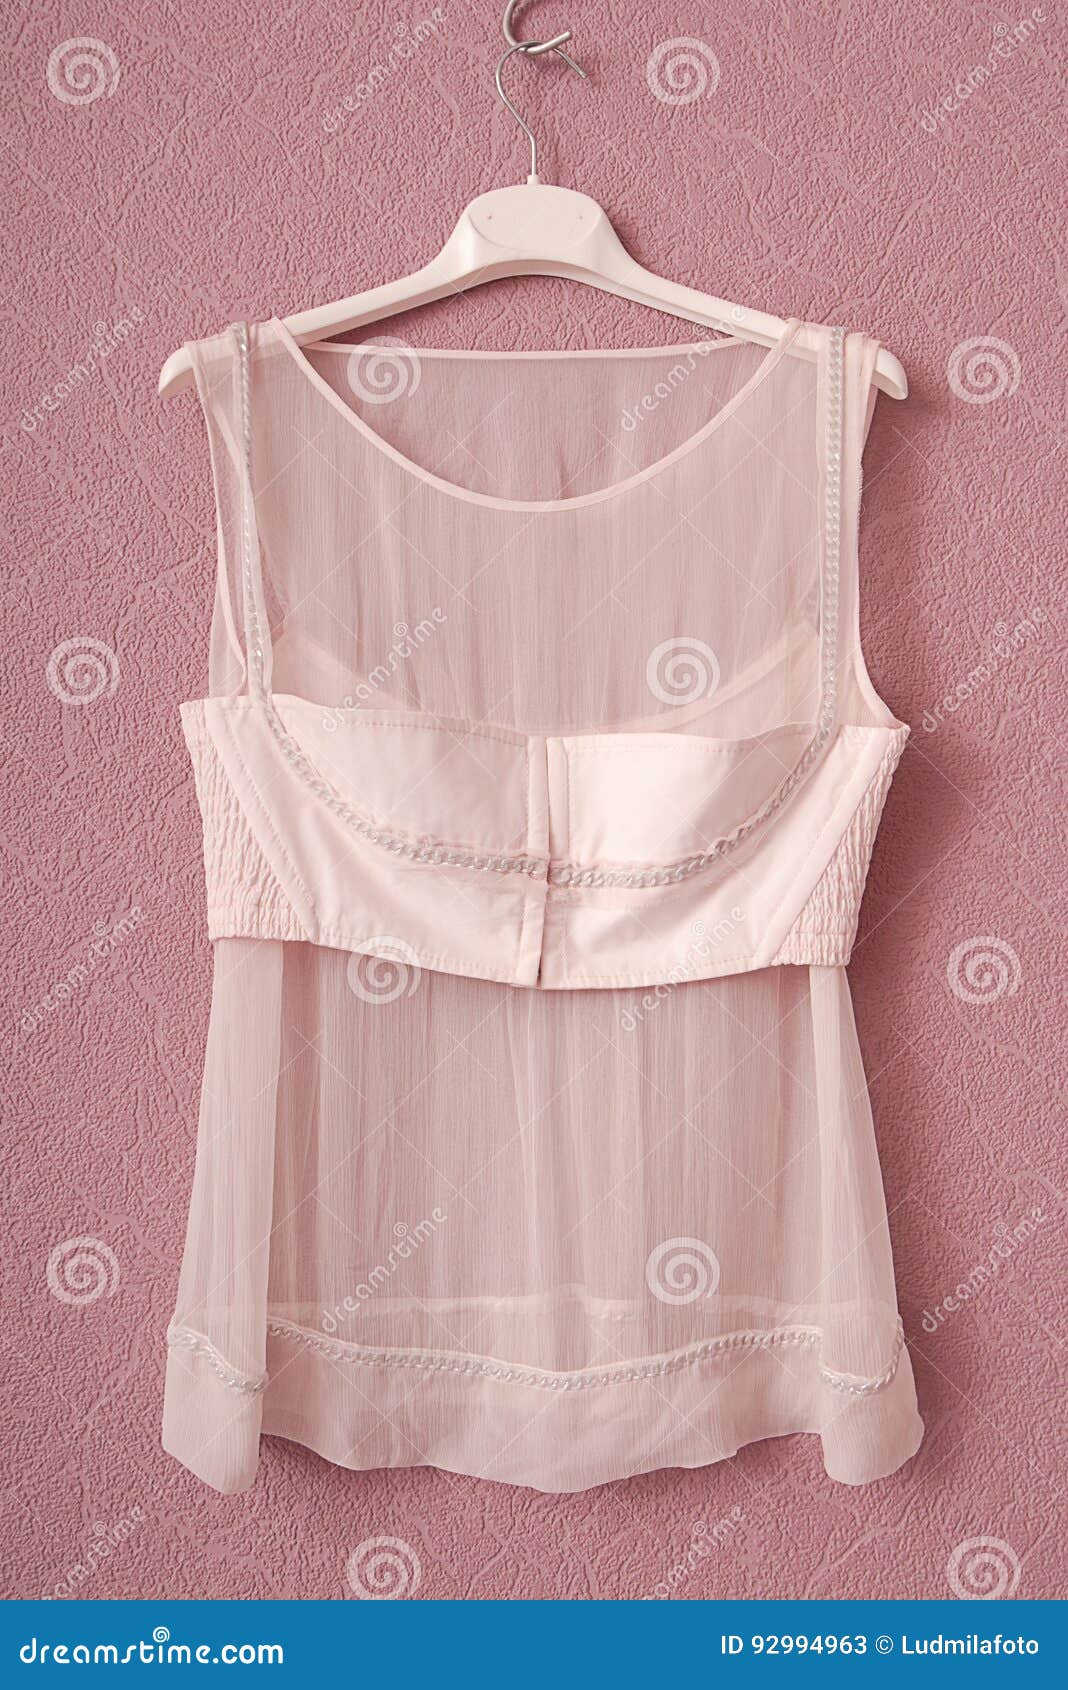 Transperent Blouse is on Hanger. Stock Image - Image of blouse, decor ...